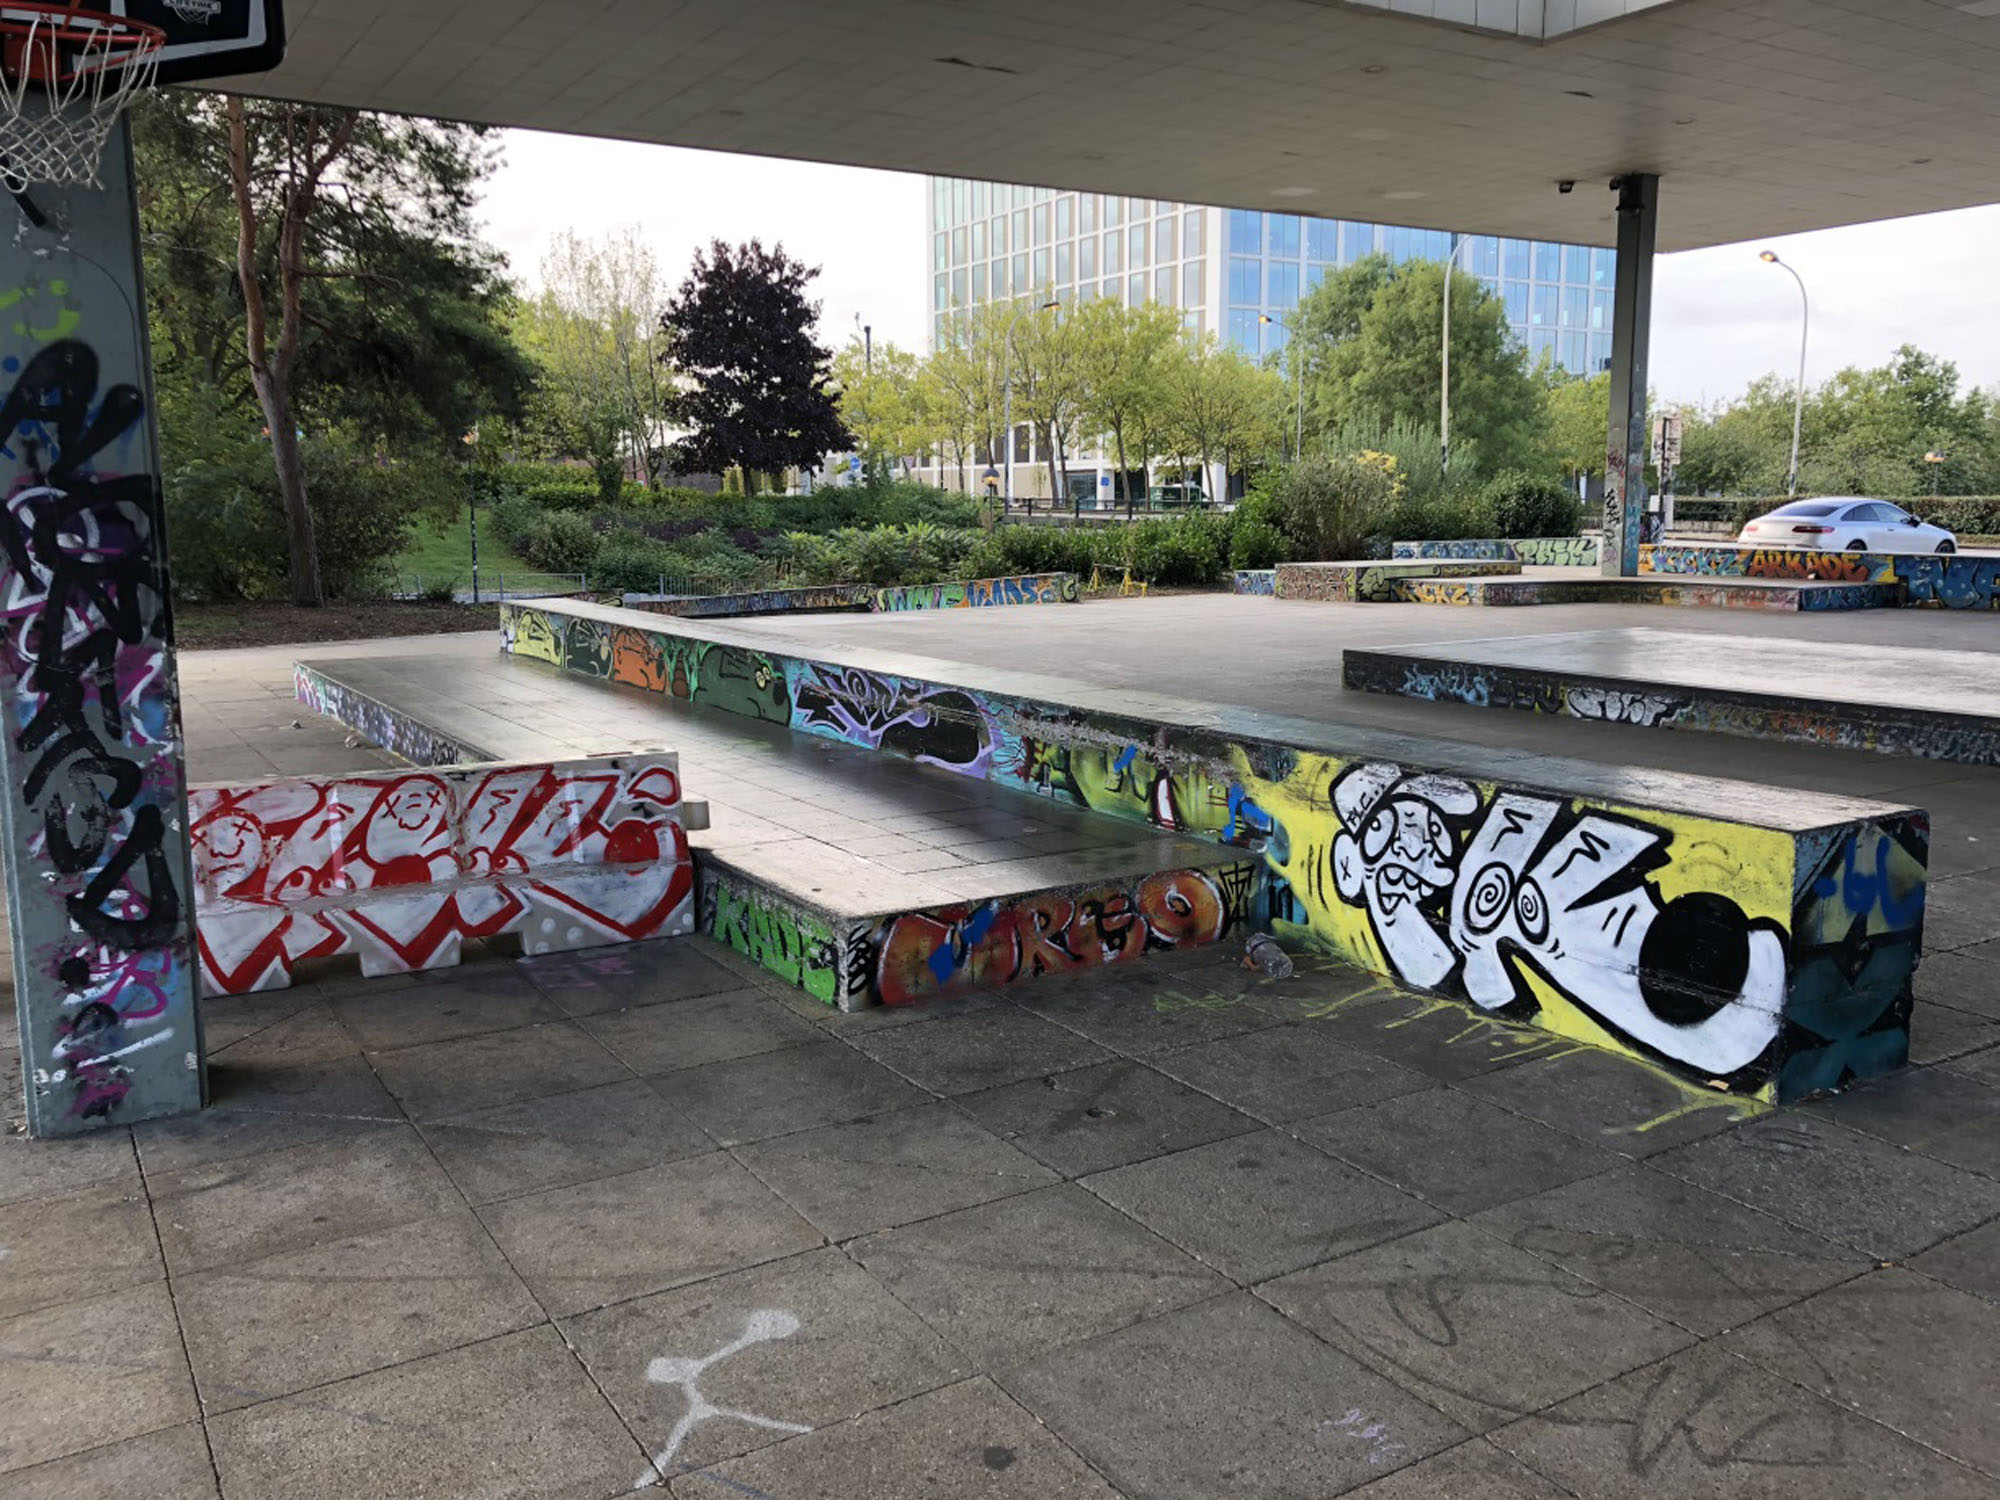 buszy plaza skatepark milton keynes review tips skateboarding in buckinghamshire u k